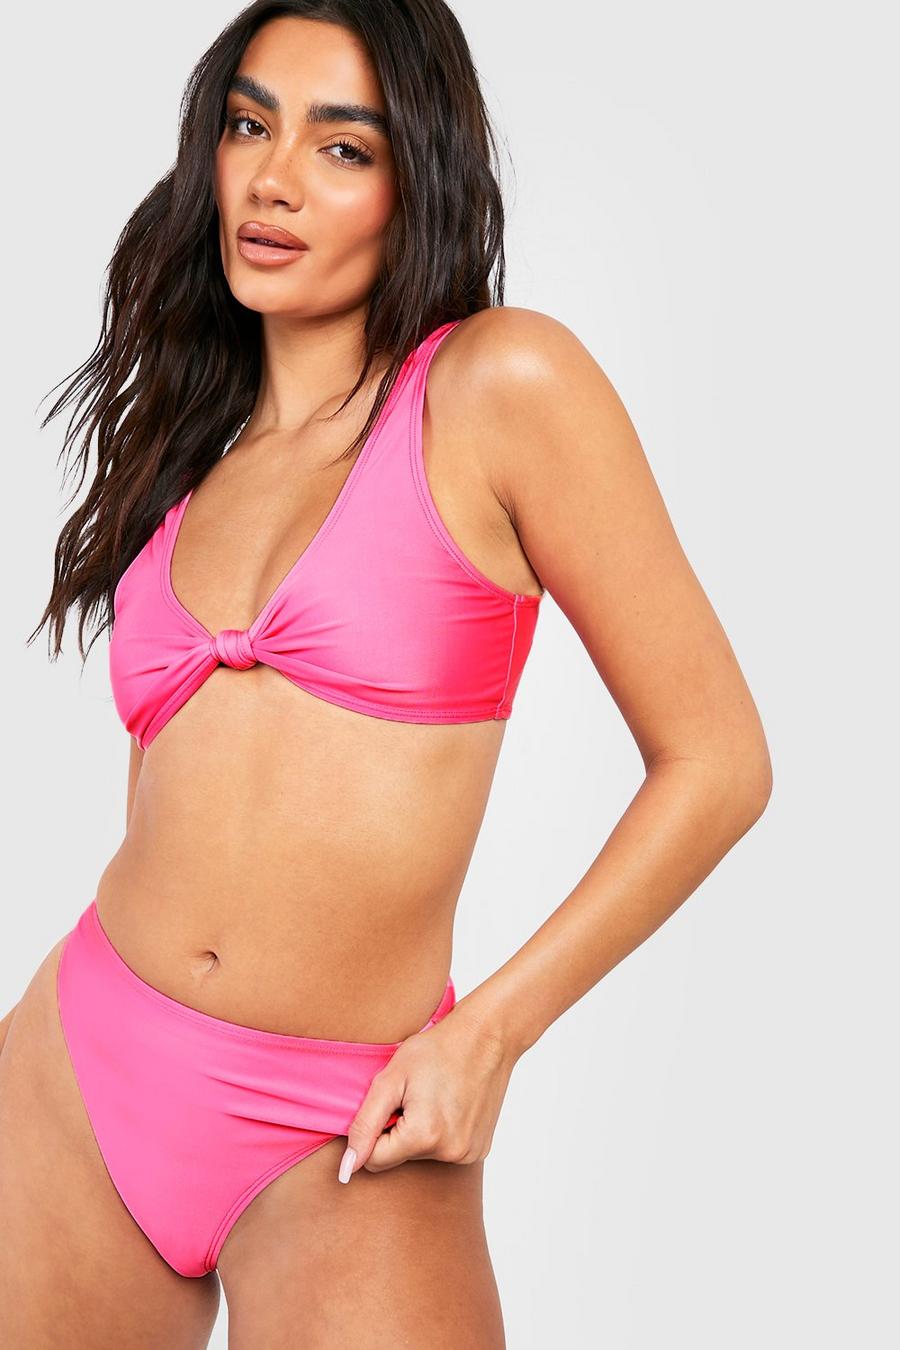 Baby pink Opgeknoopte Bikini Set Met Laag Decolleté